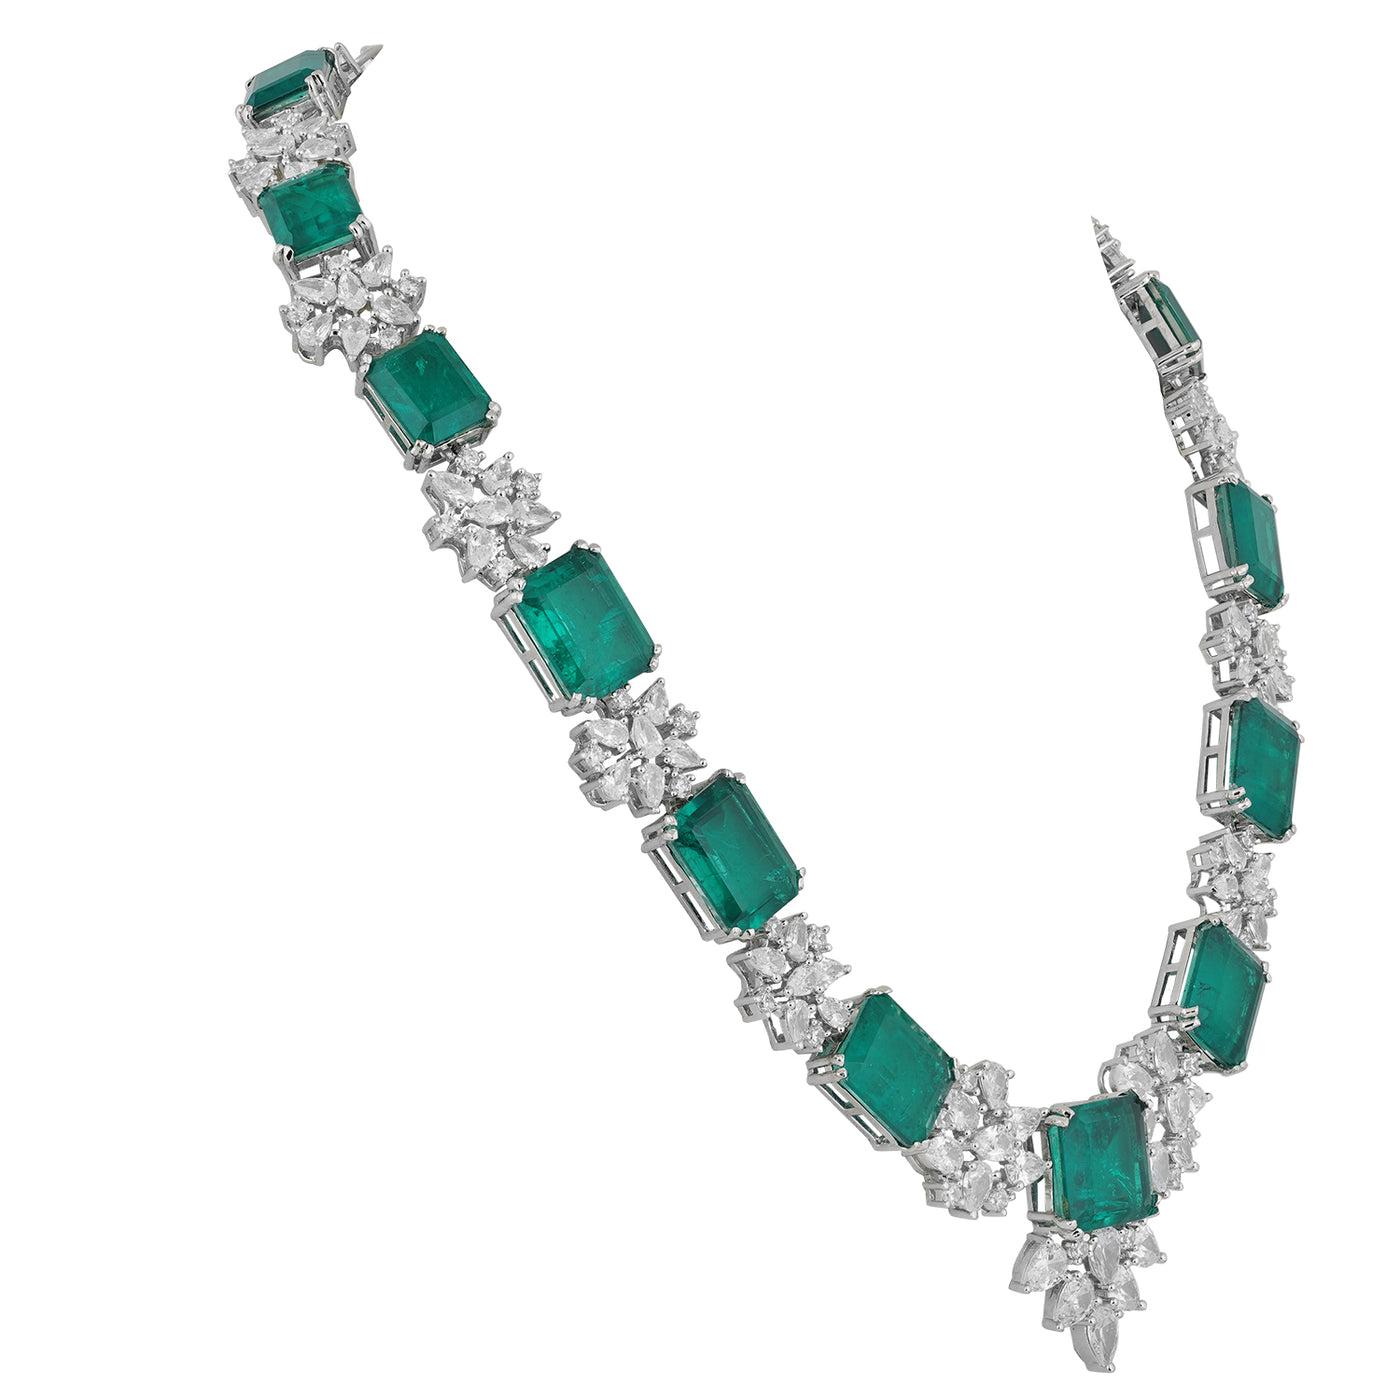  Emerald Green Stone CZ Necklace Set